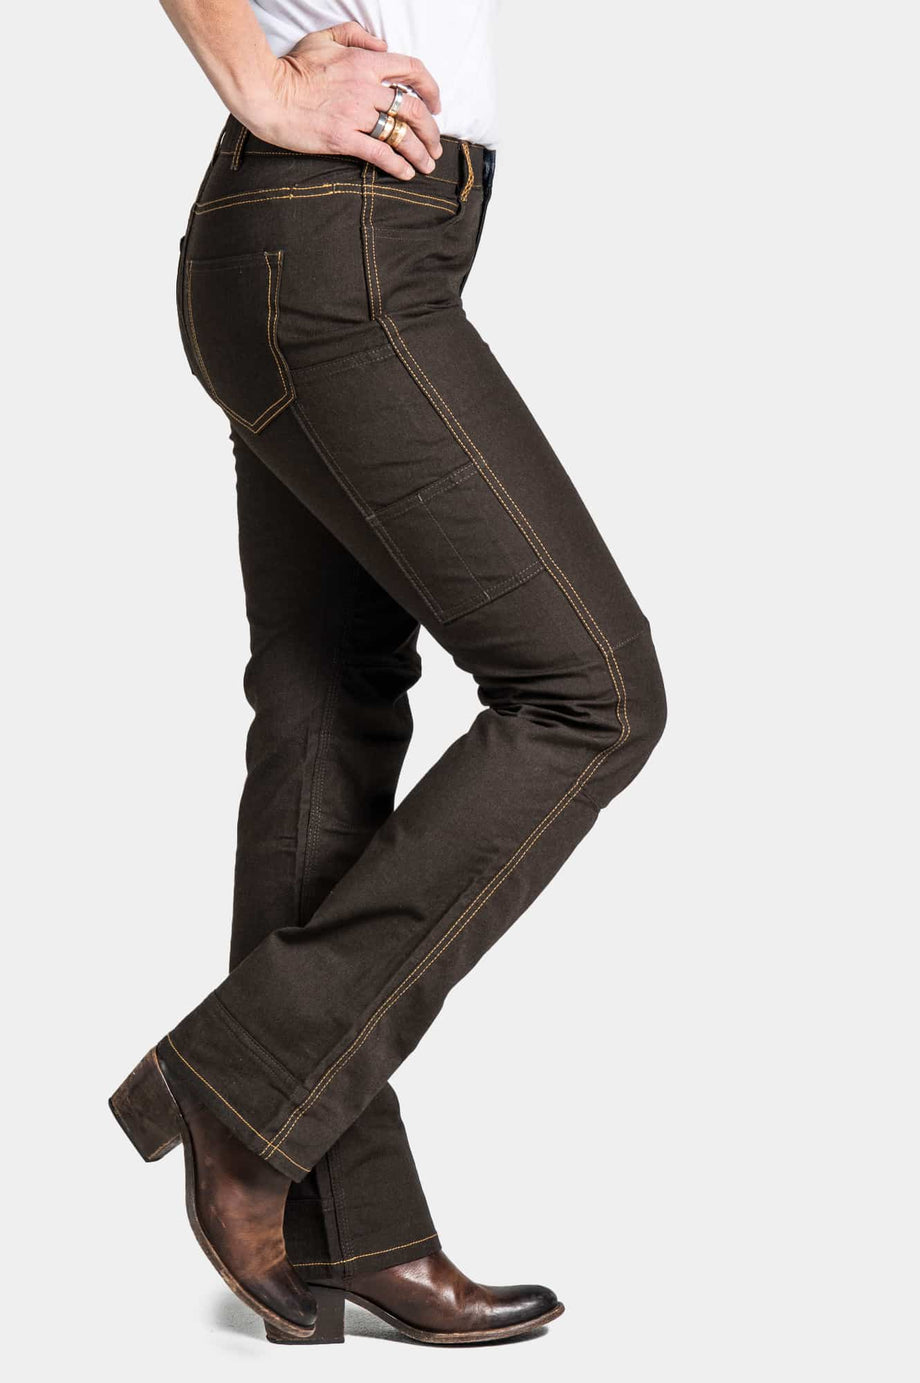 Kodiak - Workwear Trousers for Men